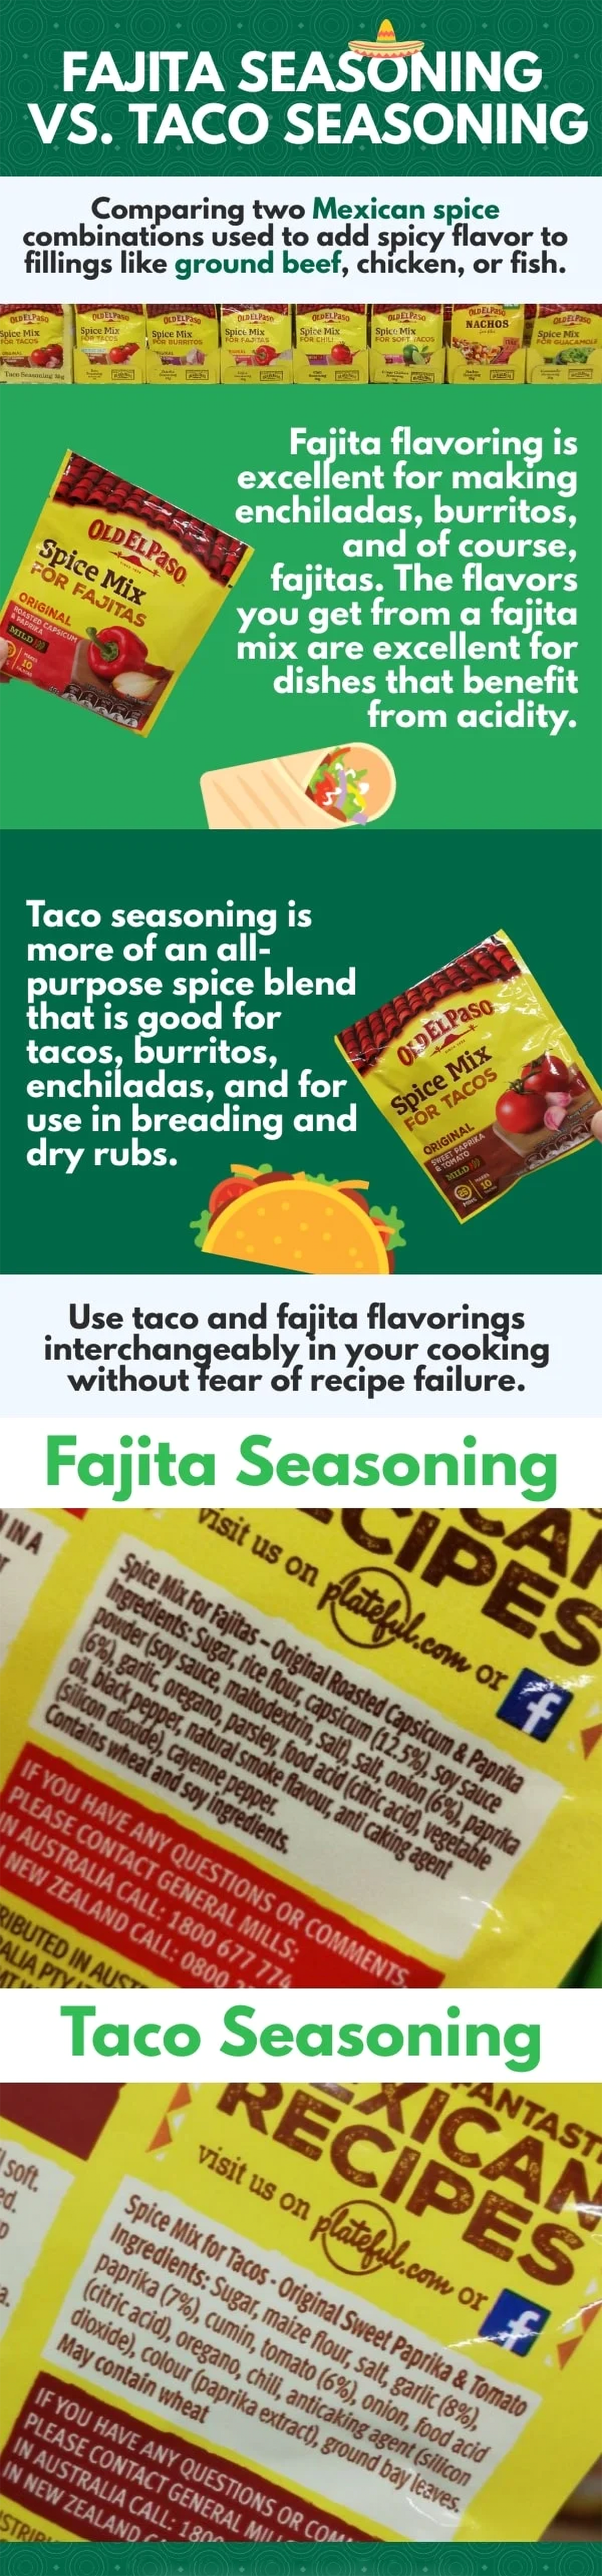 Fajita Seasoning vs Taco Seasoning Infographic Comparison